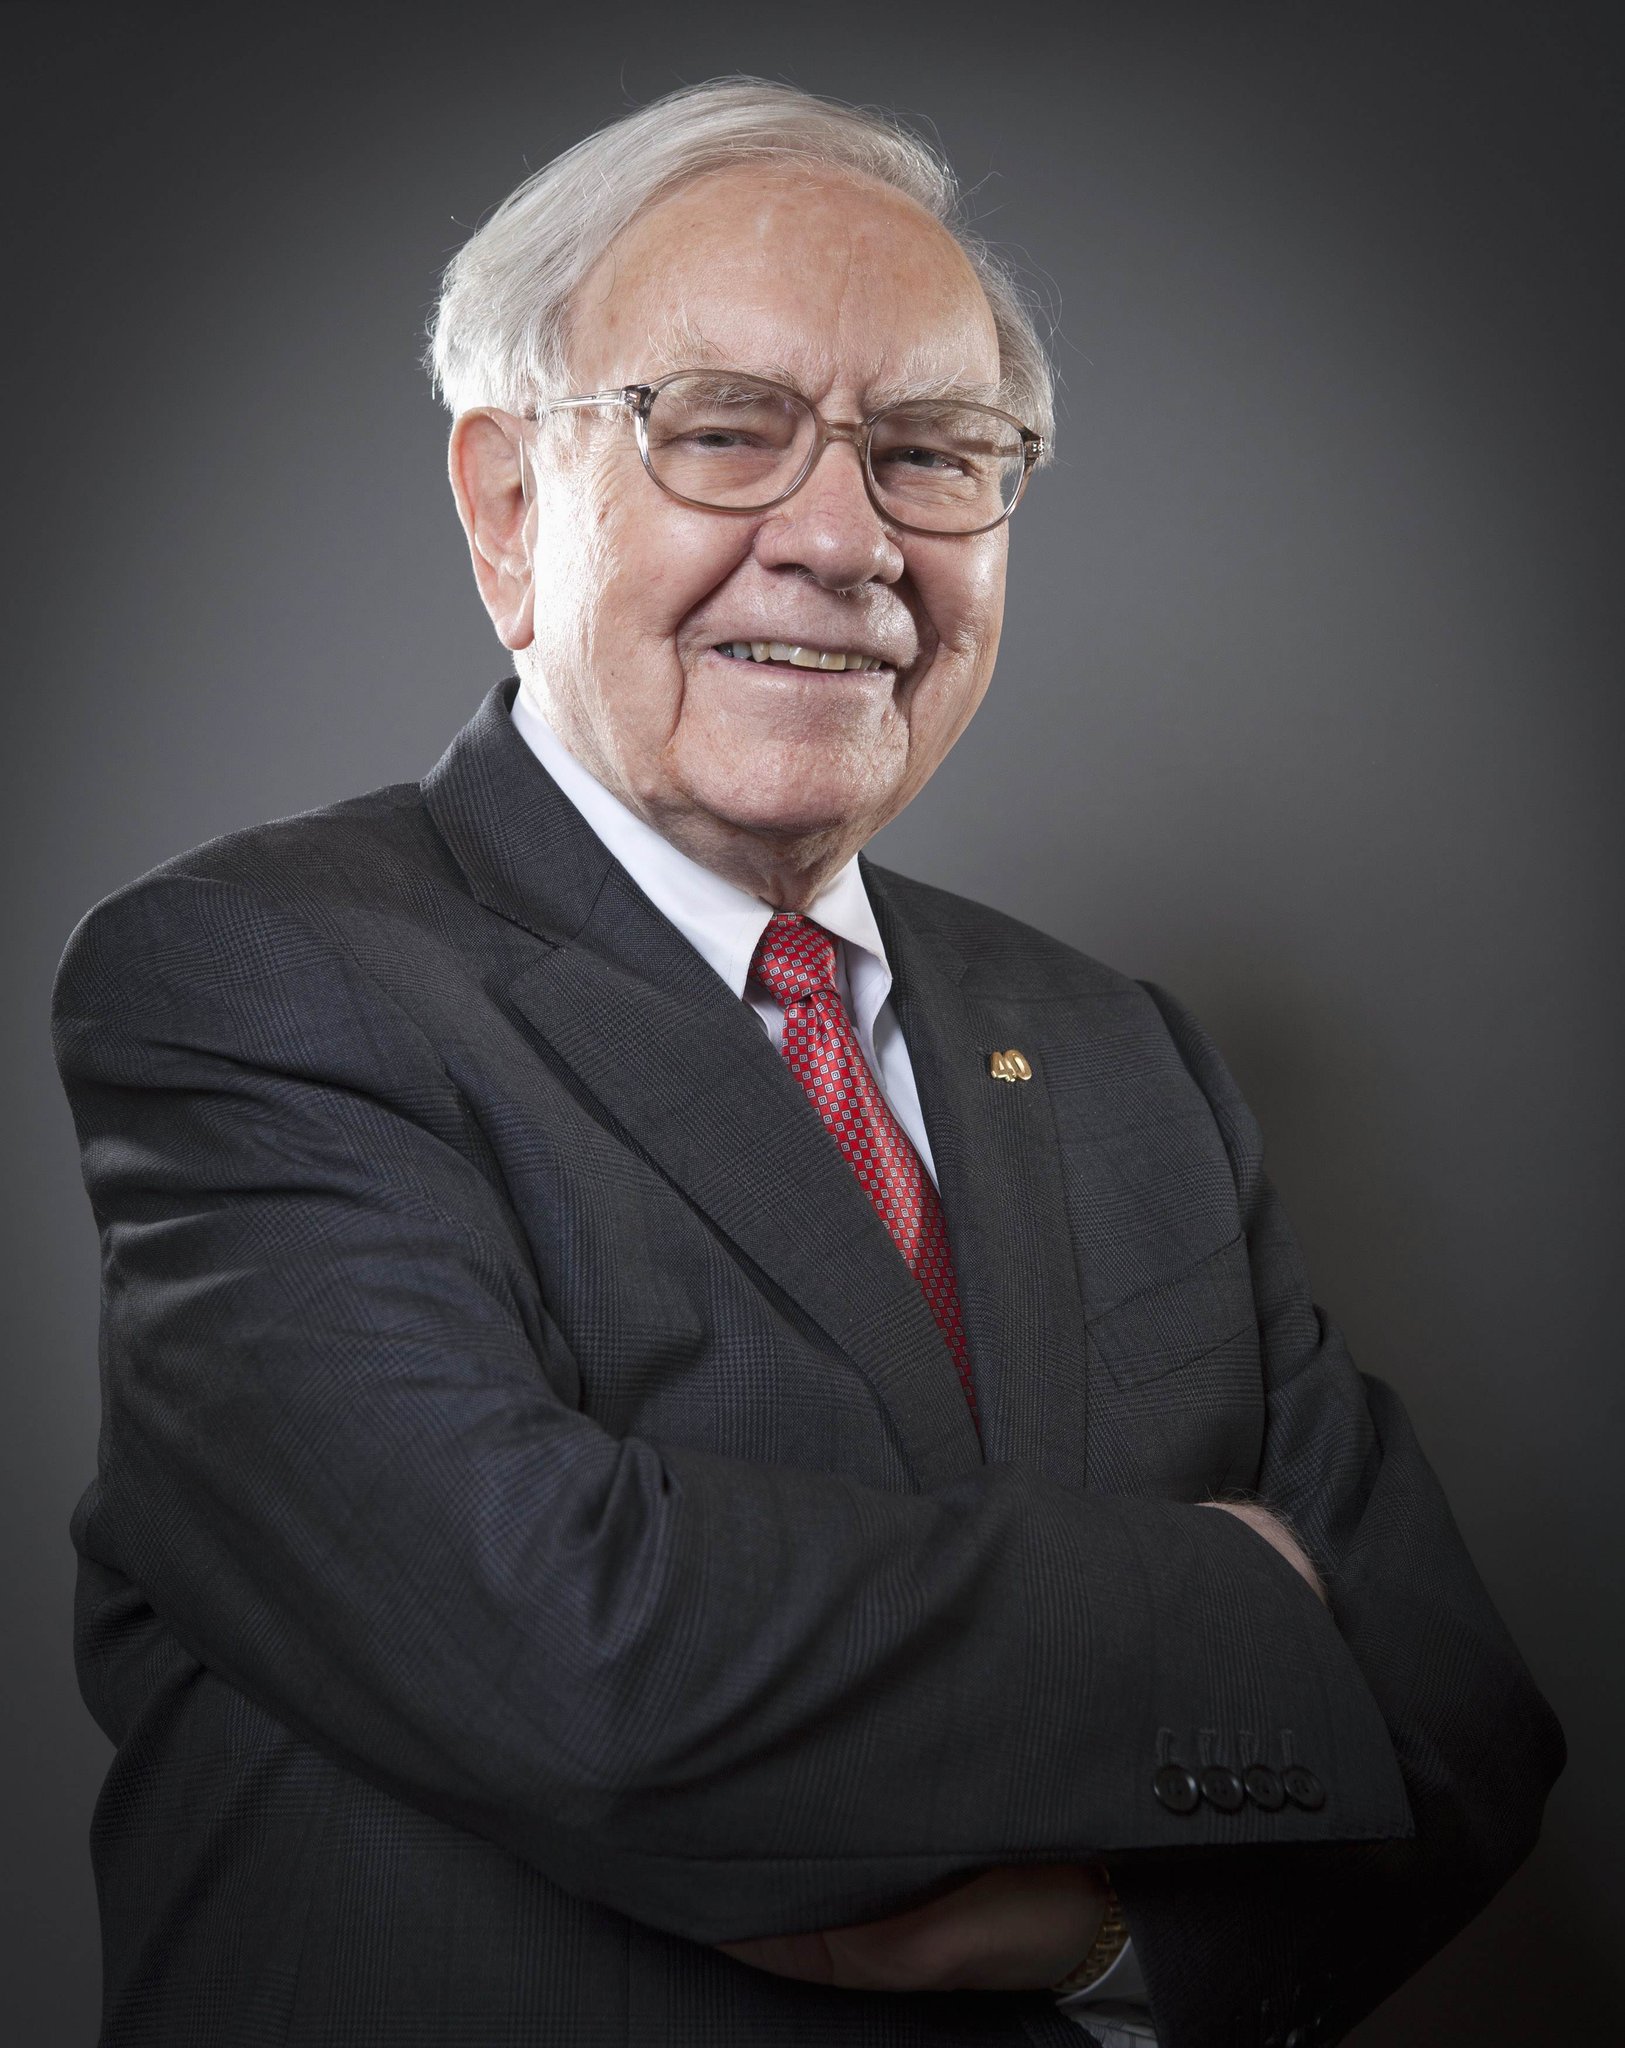 Warren Buffett turning 91 today:
Happy Birthday 